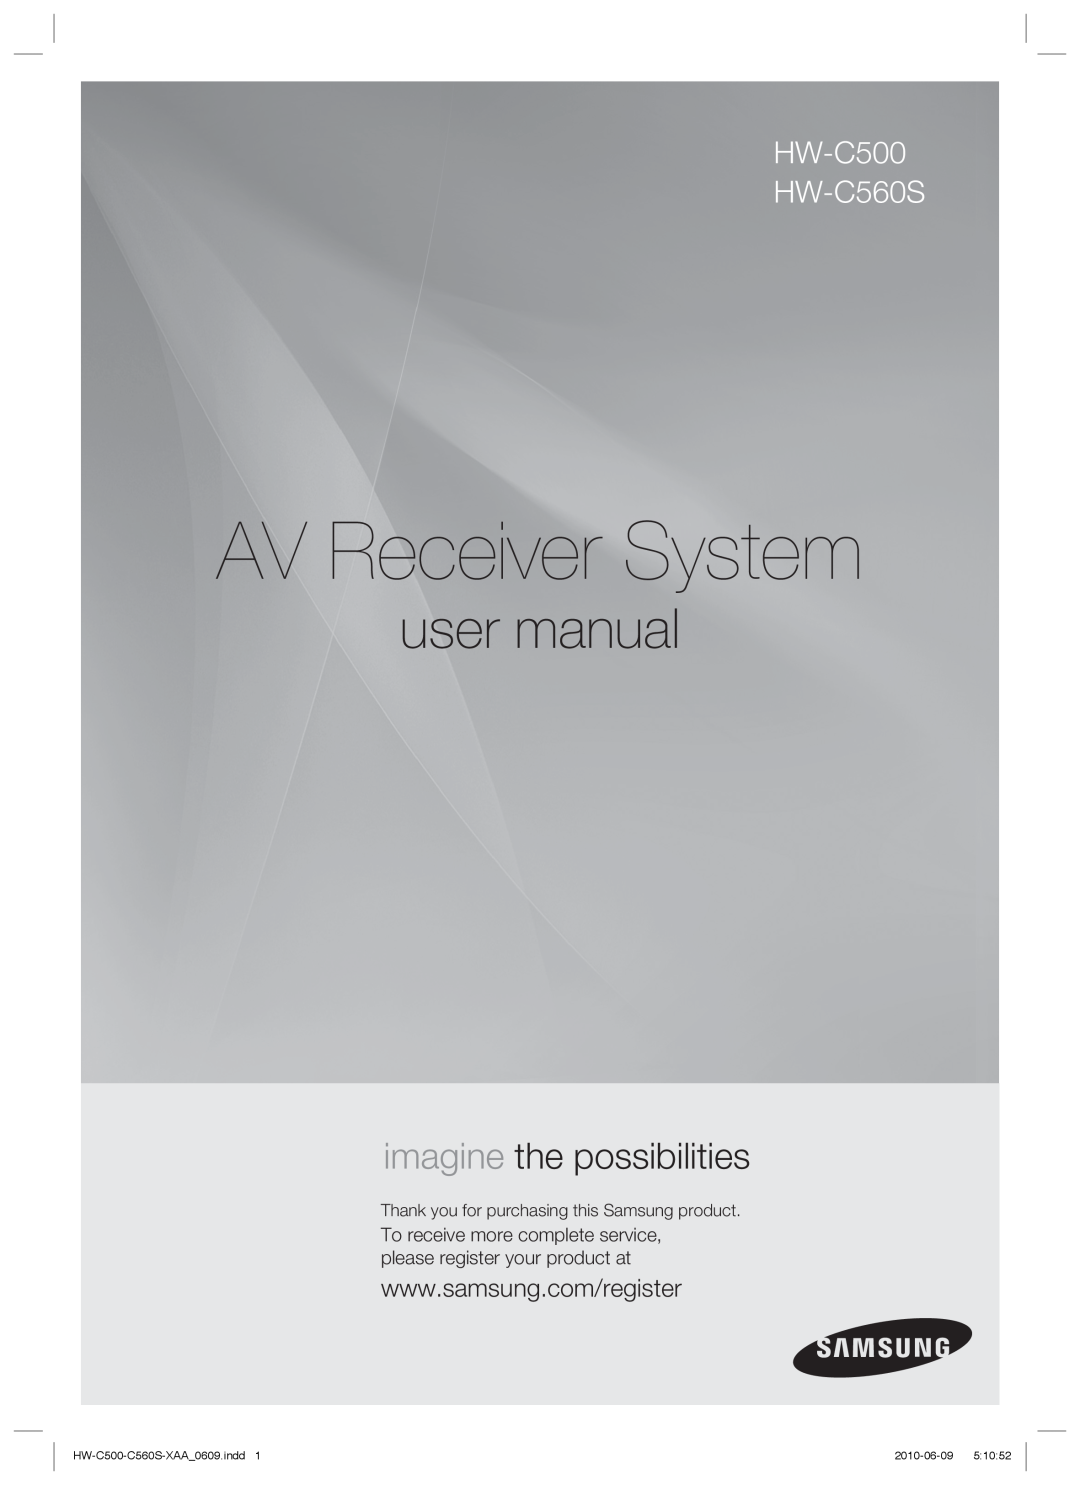 Samsung user manual AV Receiver System, imagine the possibilities, HW-C500 HW-C560S, HW-C500-C560S-XAA 0609.indd1 